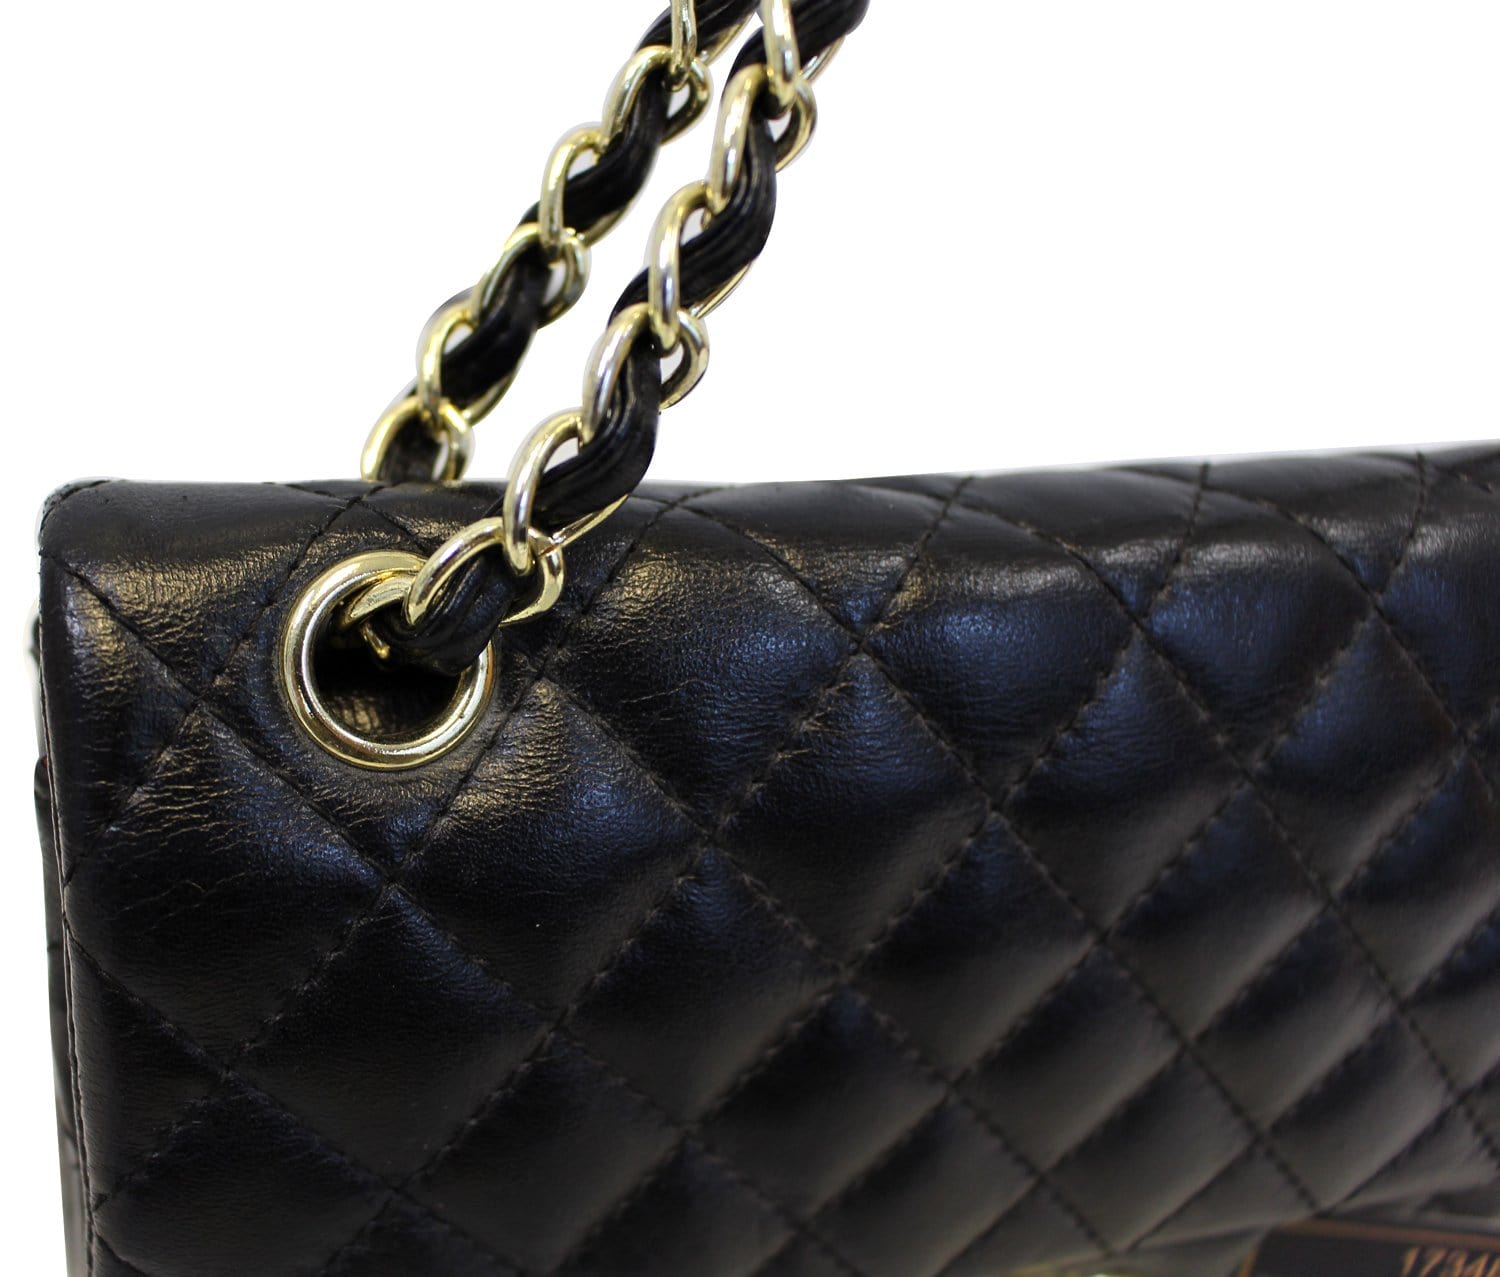 chanel quilted handbag black